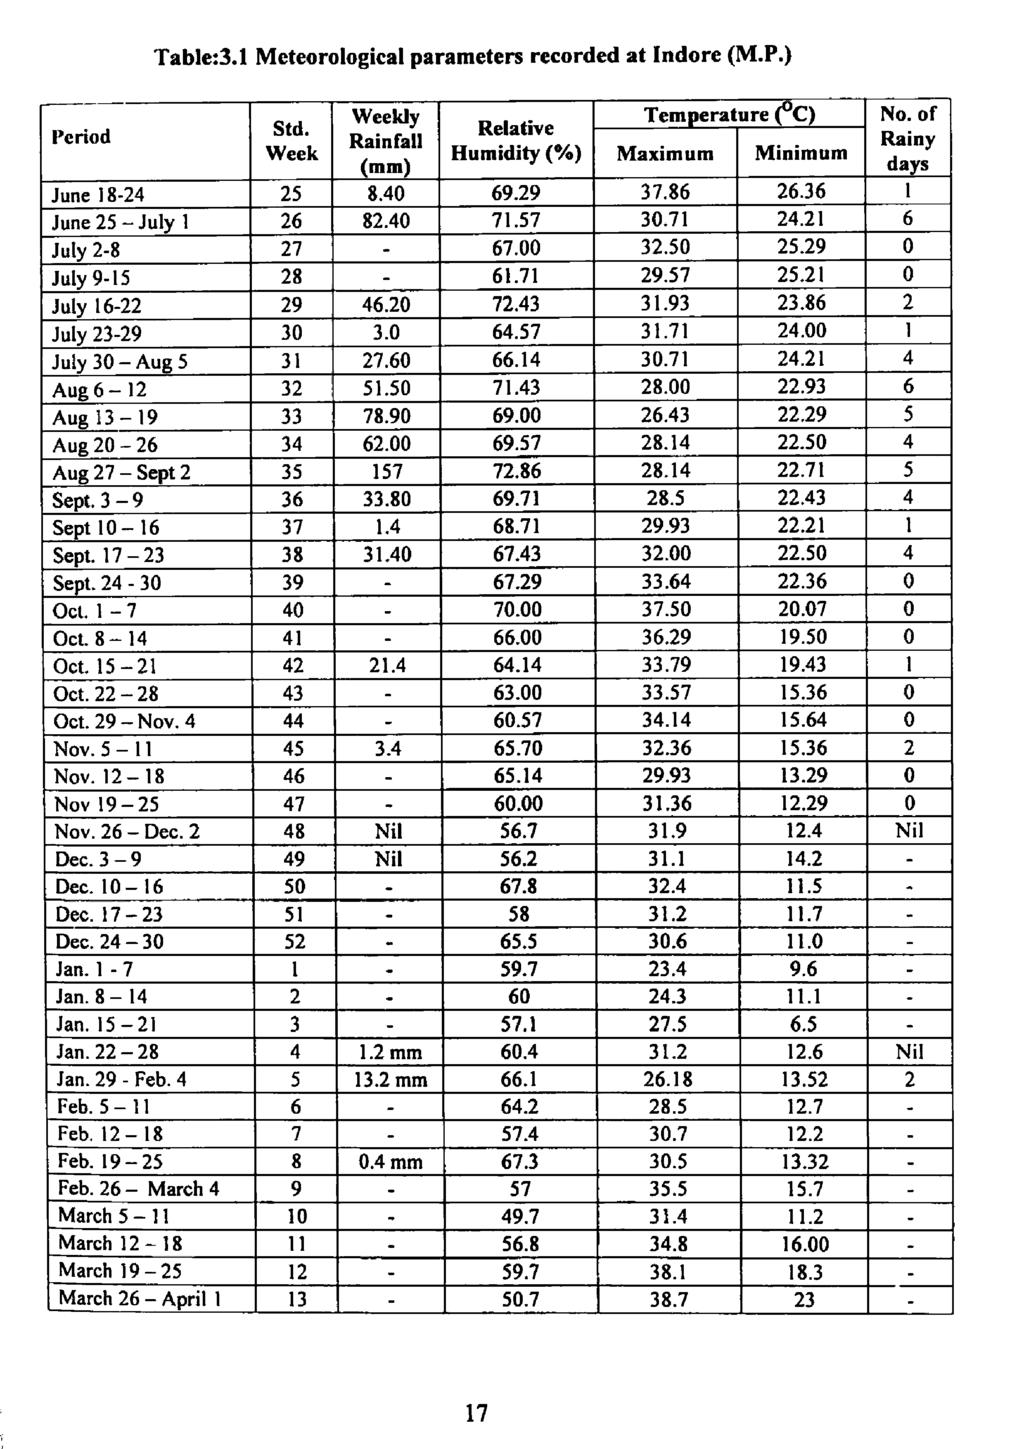 Period Table:3.1 Meteorological parameters recorded at Indore (M.P.) Std. Week Weekly Rainfall (mm) Relative Humidity (%) Tem erature ( C) Maximum Minimum June 18-24 25 8.40 69.29 37.86 26.